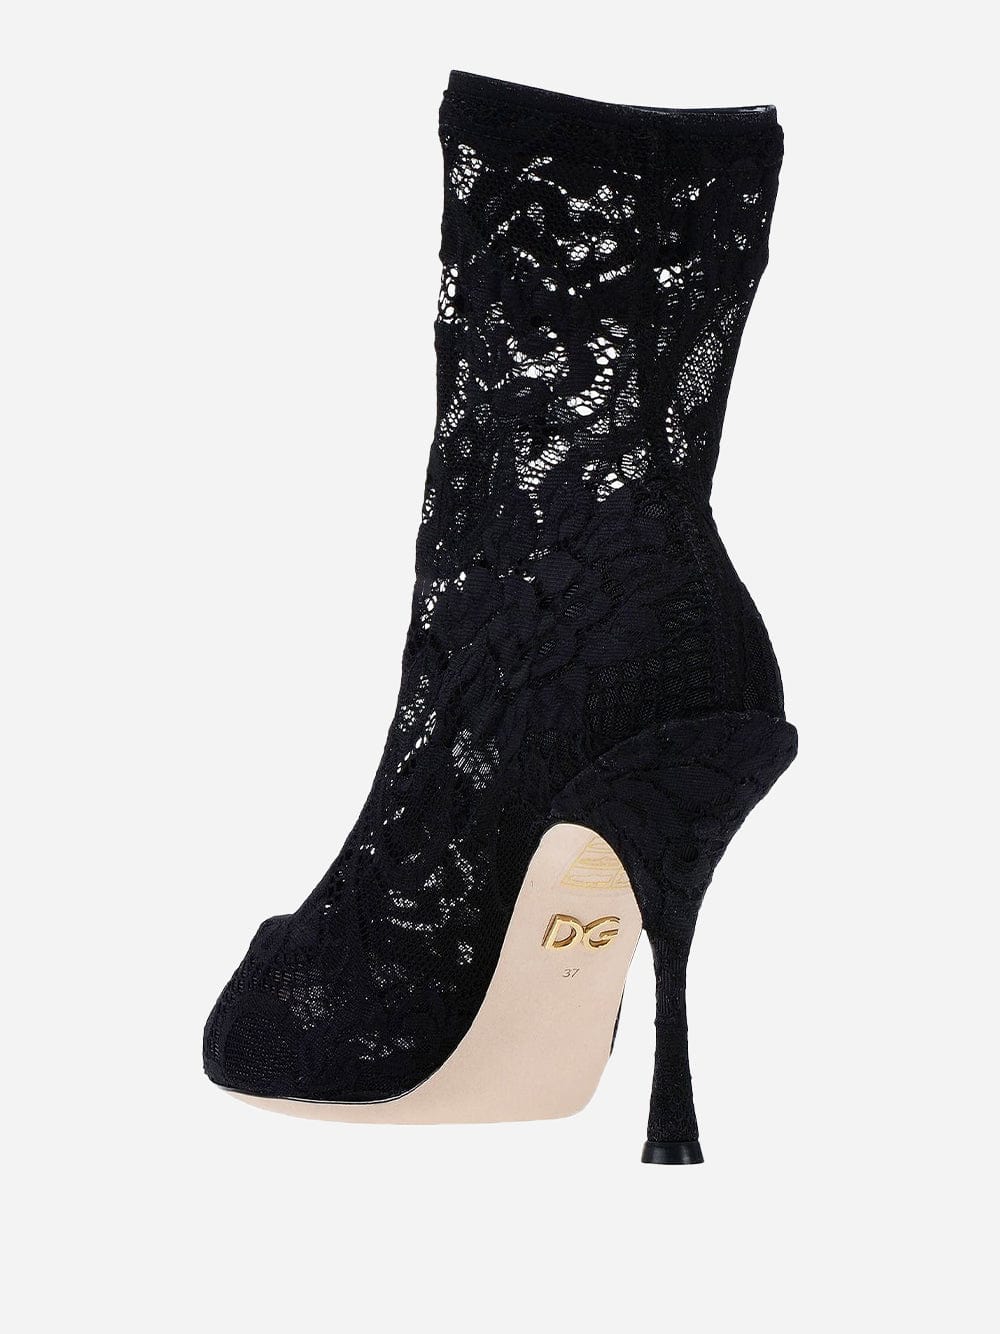 Dolce & Gabbana Taormina Lace Ankle Boots